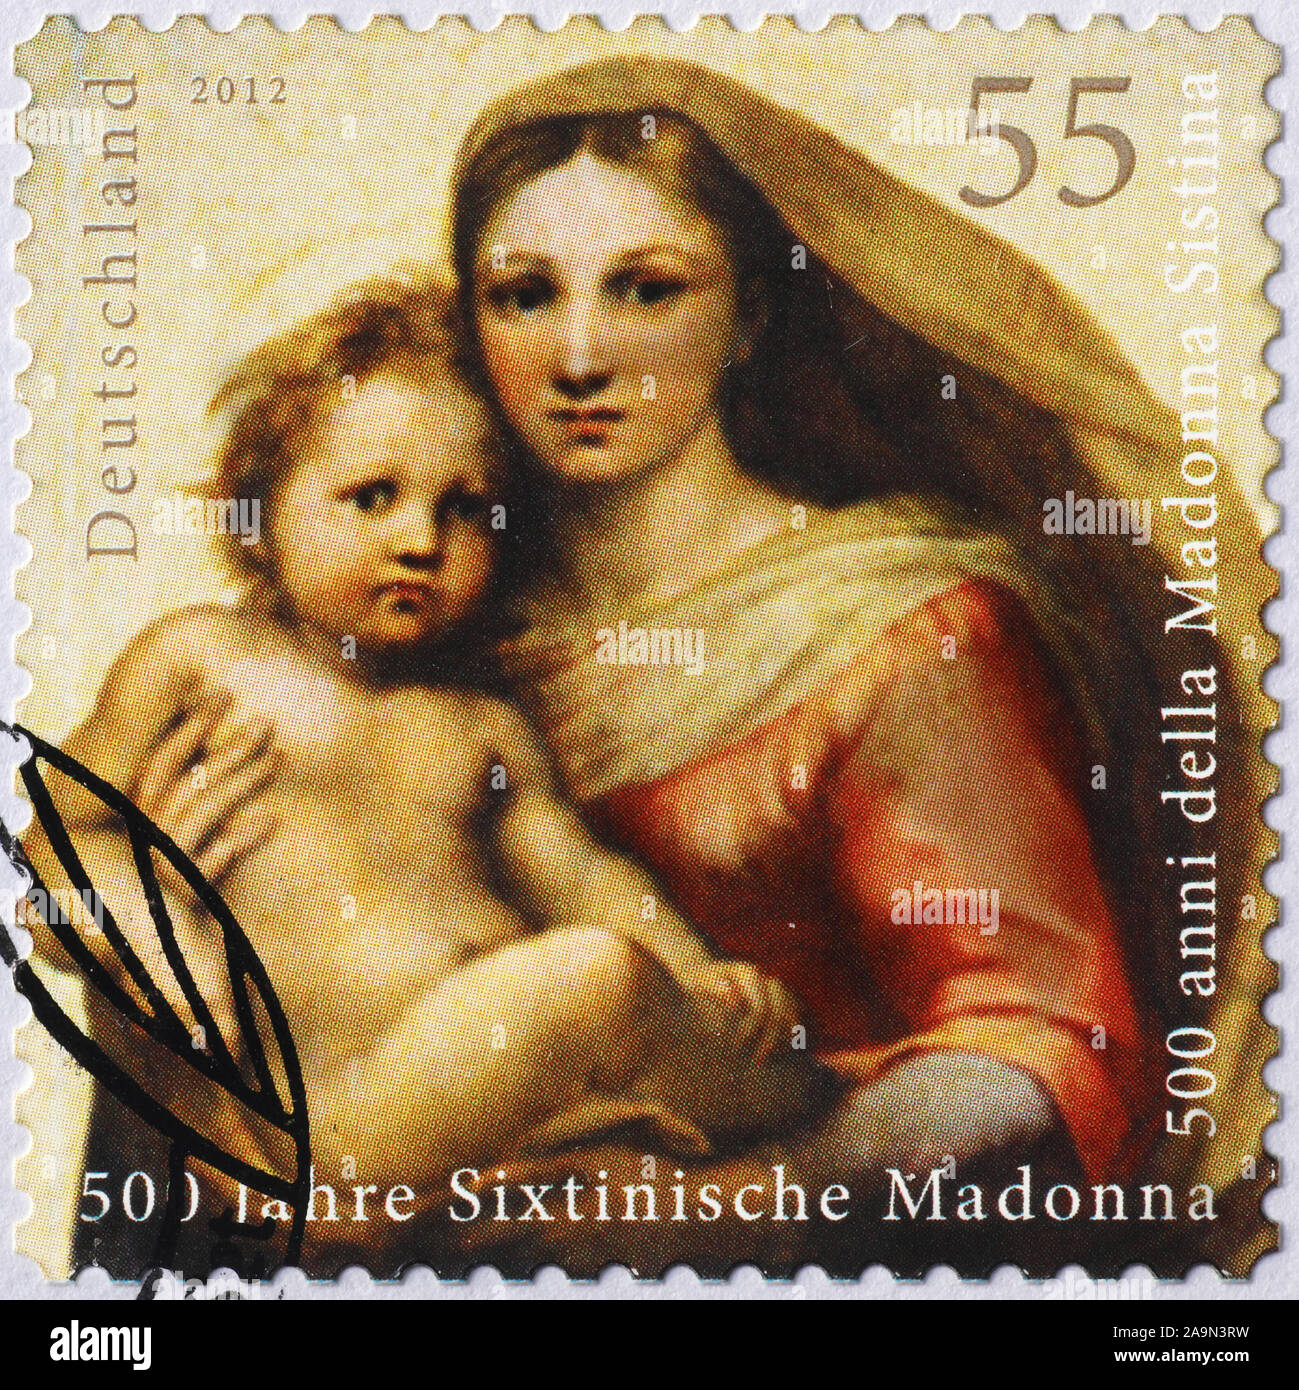 Sistine Madonna and Jesus by Raphael on postage stamp Stock Photo